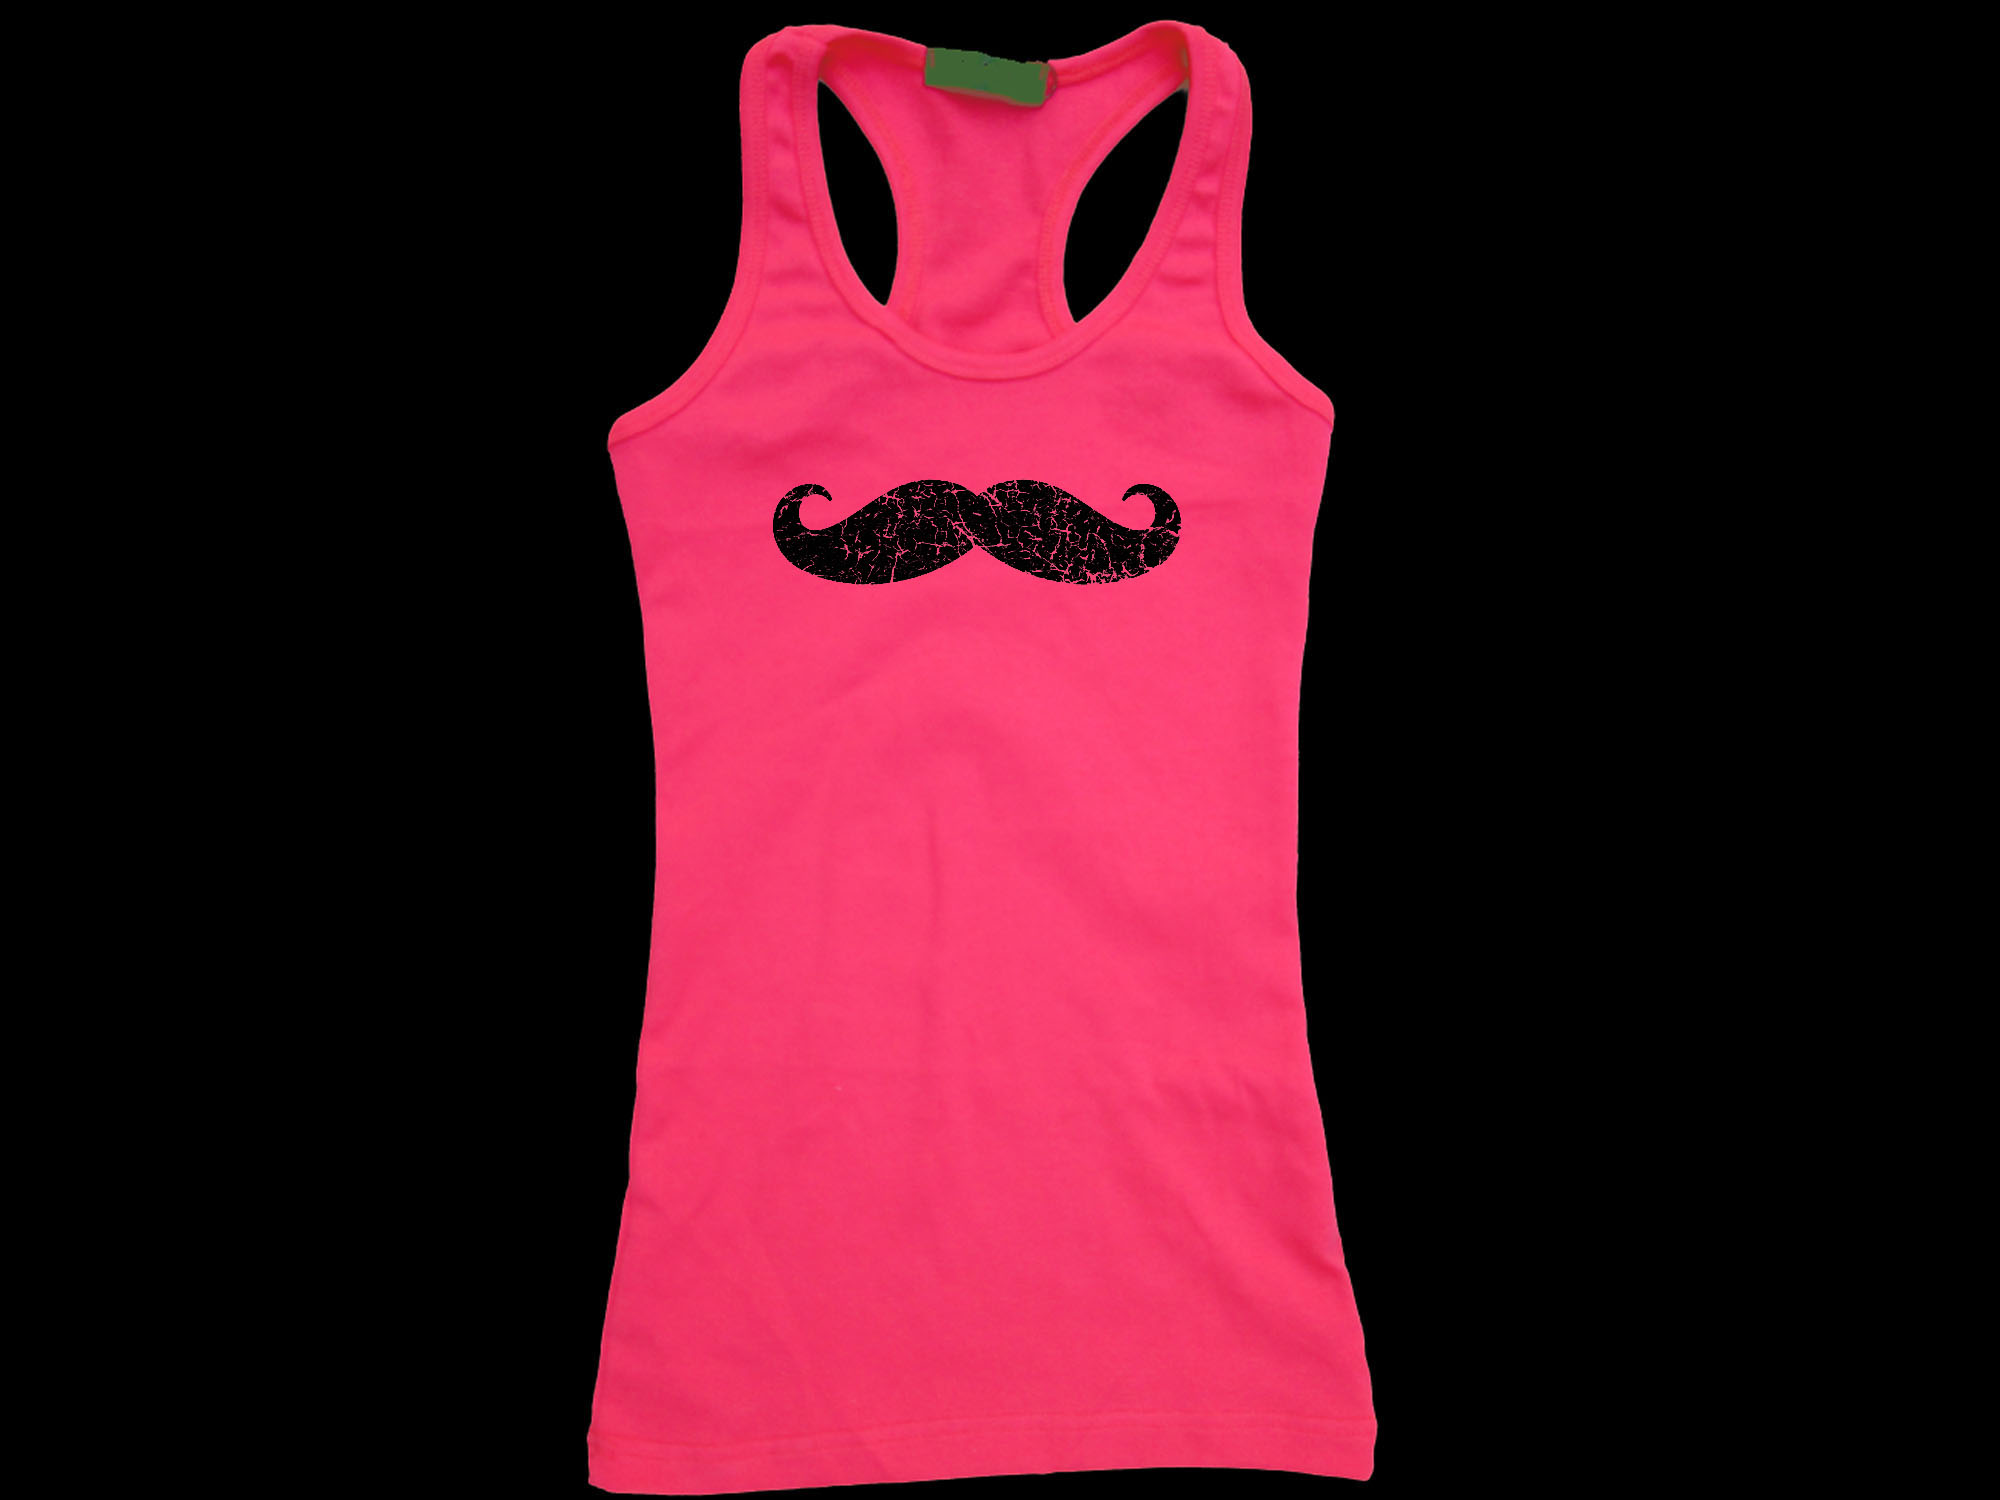 Mustache funny women racerback sleeveless tank top S/M